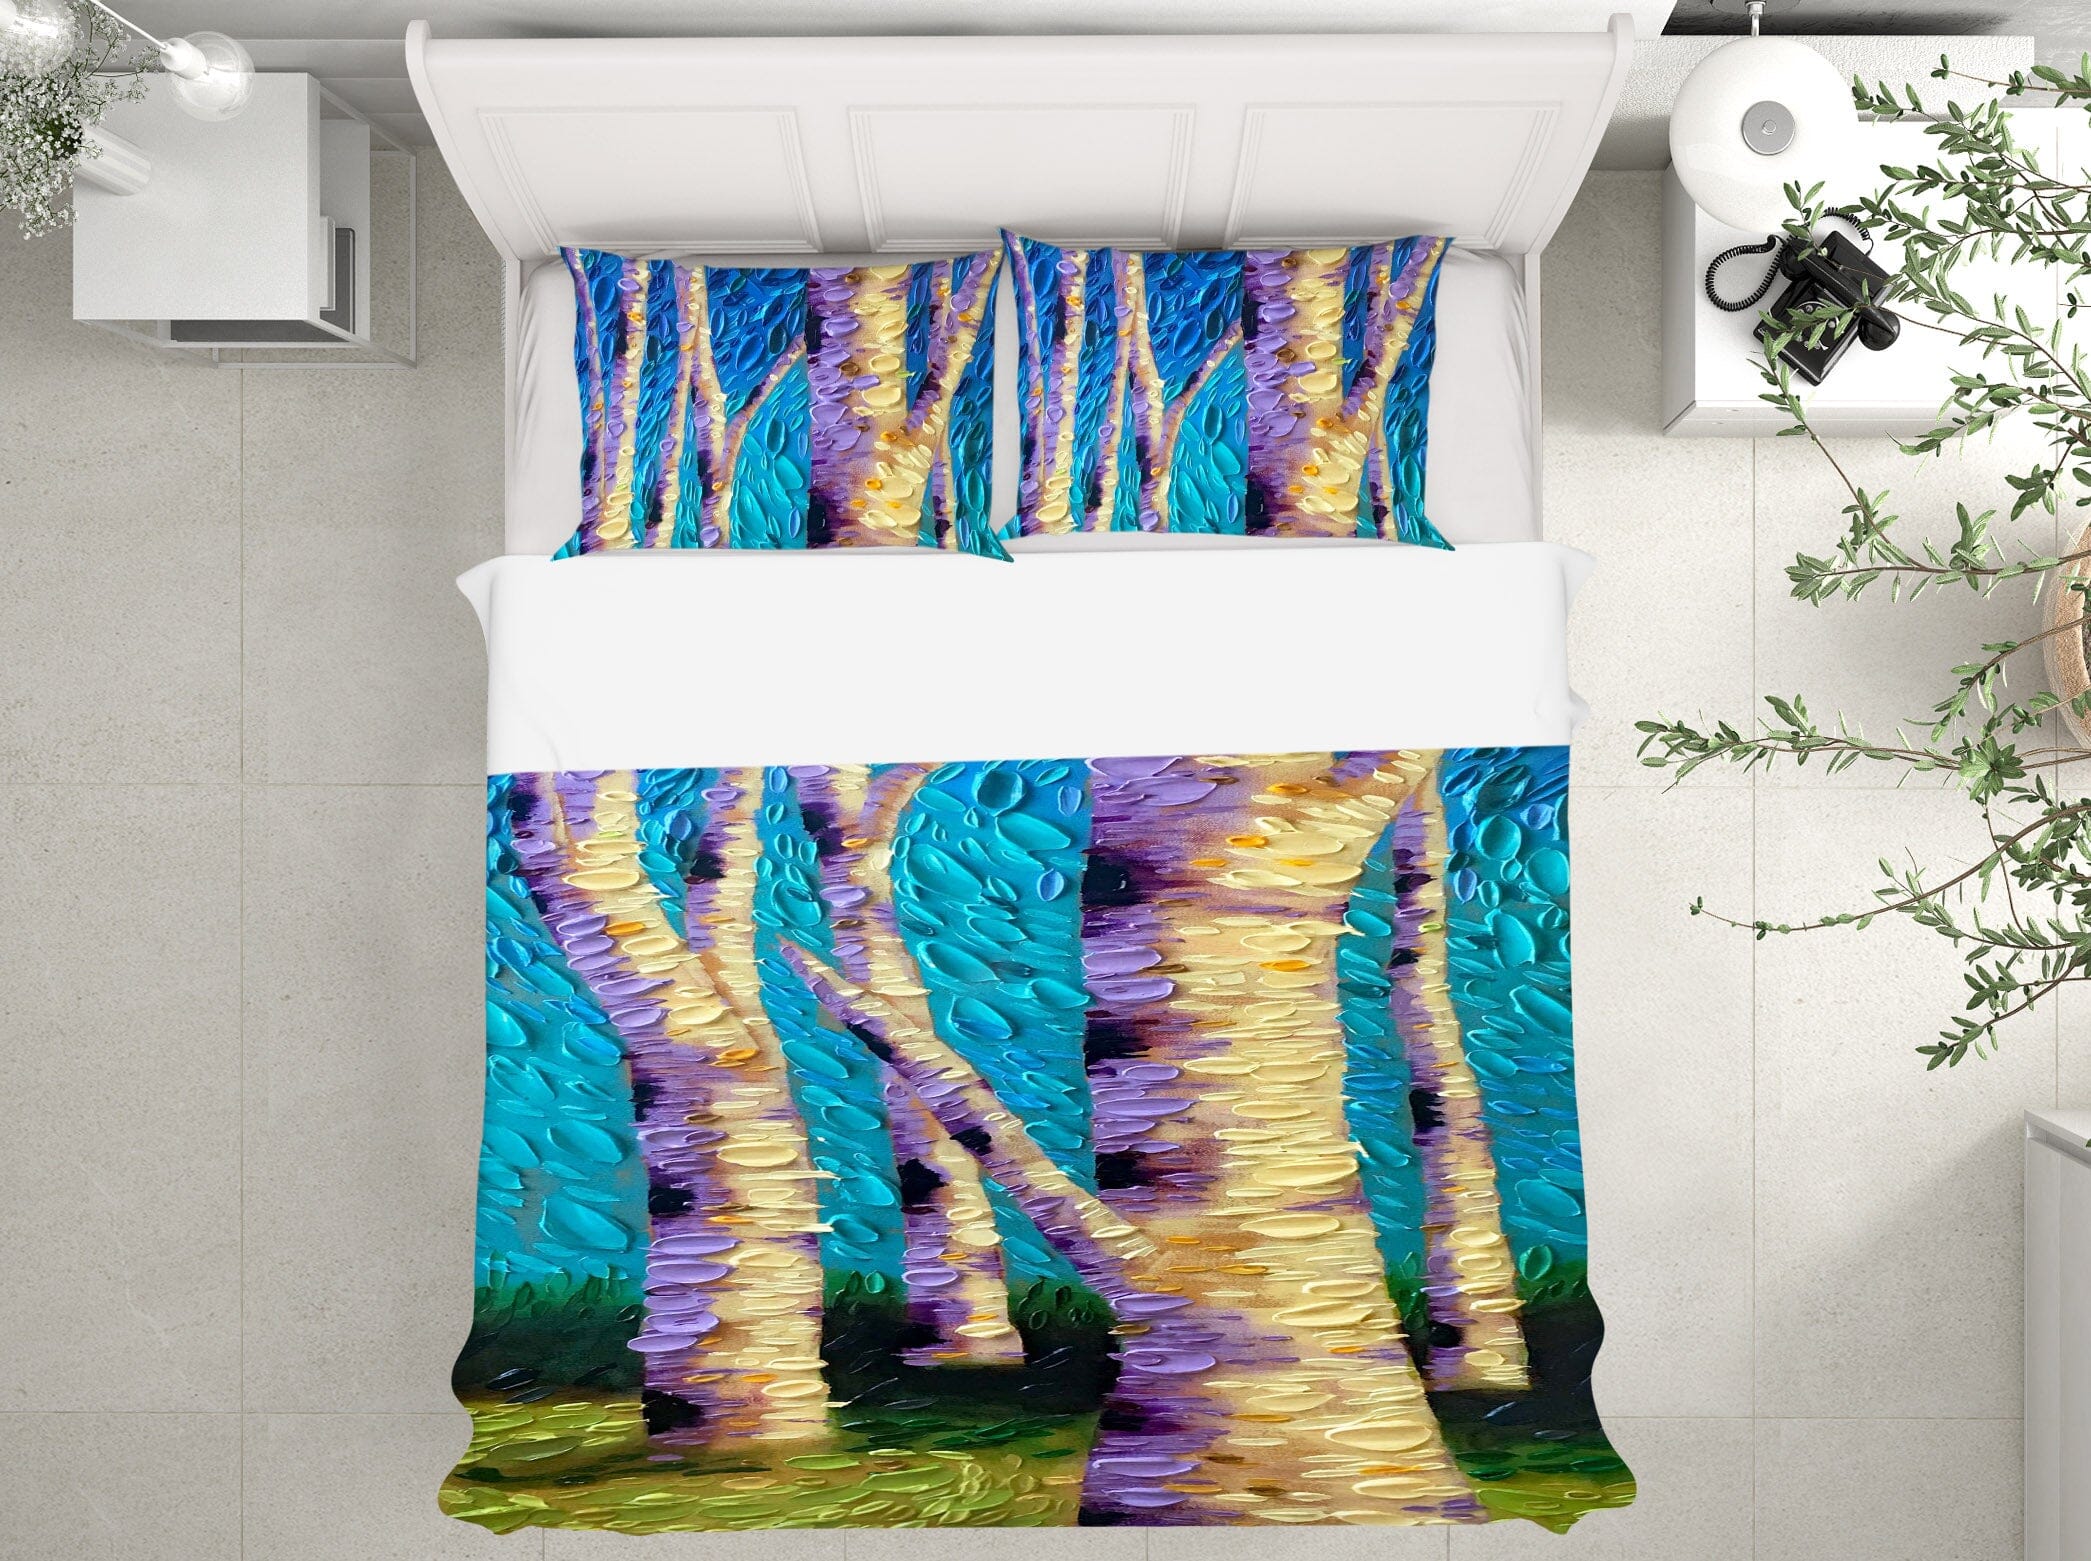 3D Trunk 2103 Dena Tollefson bedding Bed Pillowcases Quilt Quiet Covers AJ Creativity Home 